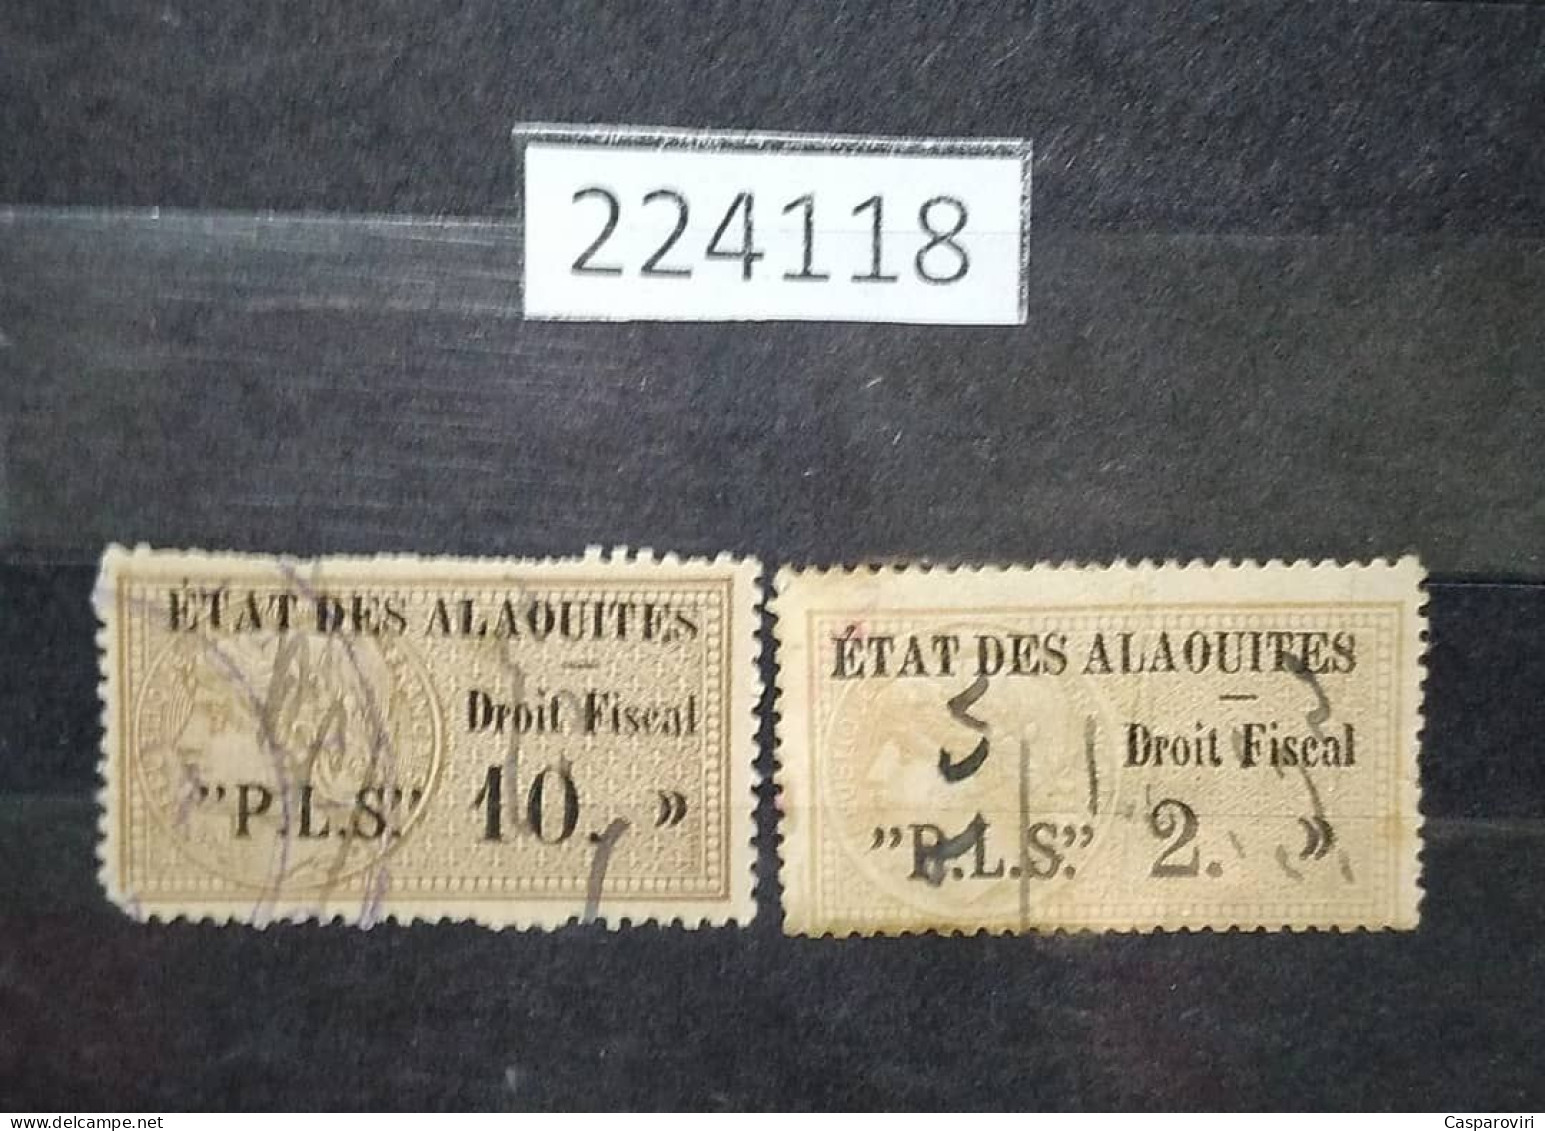 224118; French Colonies; Etat Des Alaouites; 2 Revenue French Stamps 2, 10 P ;Black Overprint Droit Fiscal; USED - Gebruikt